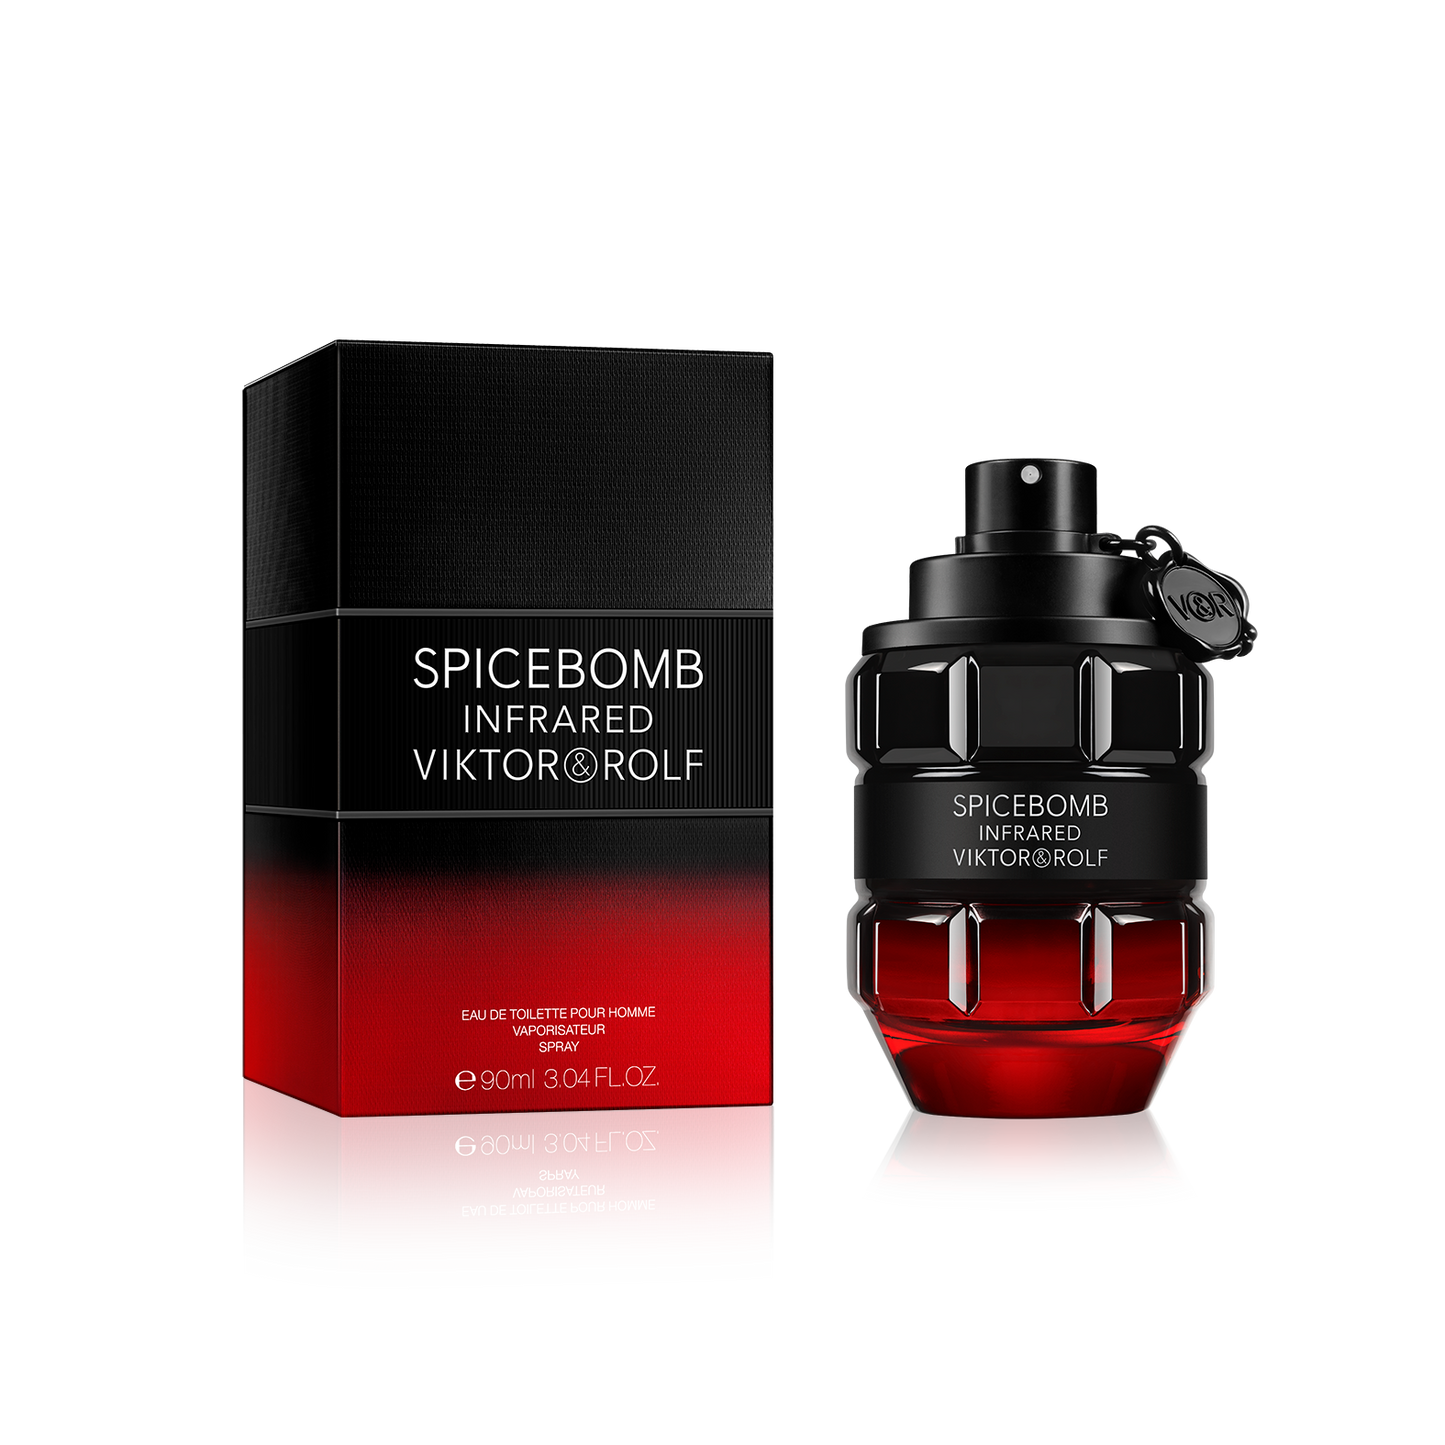 Spicebomb Infrared